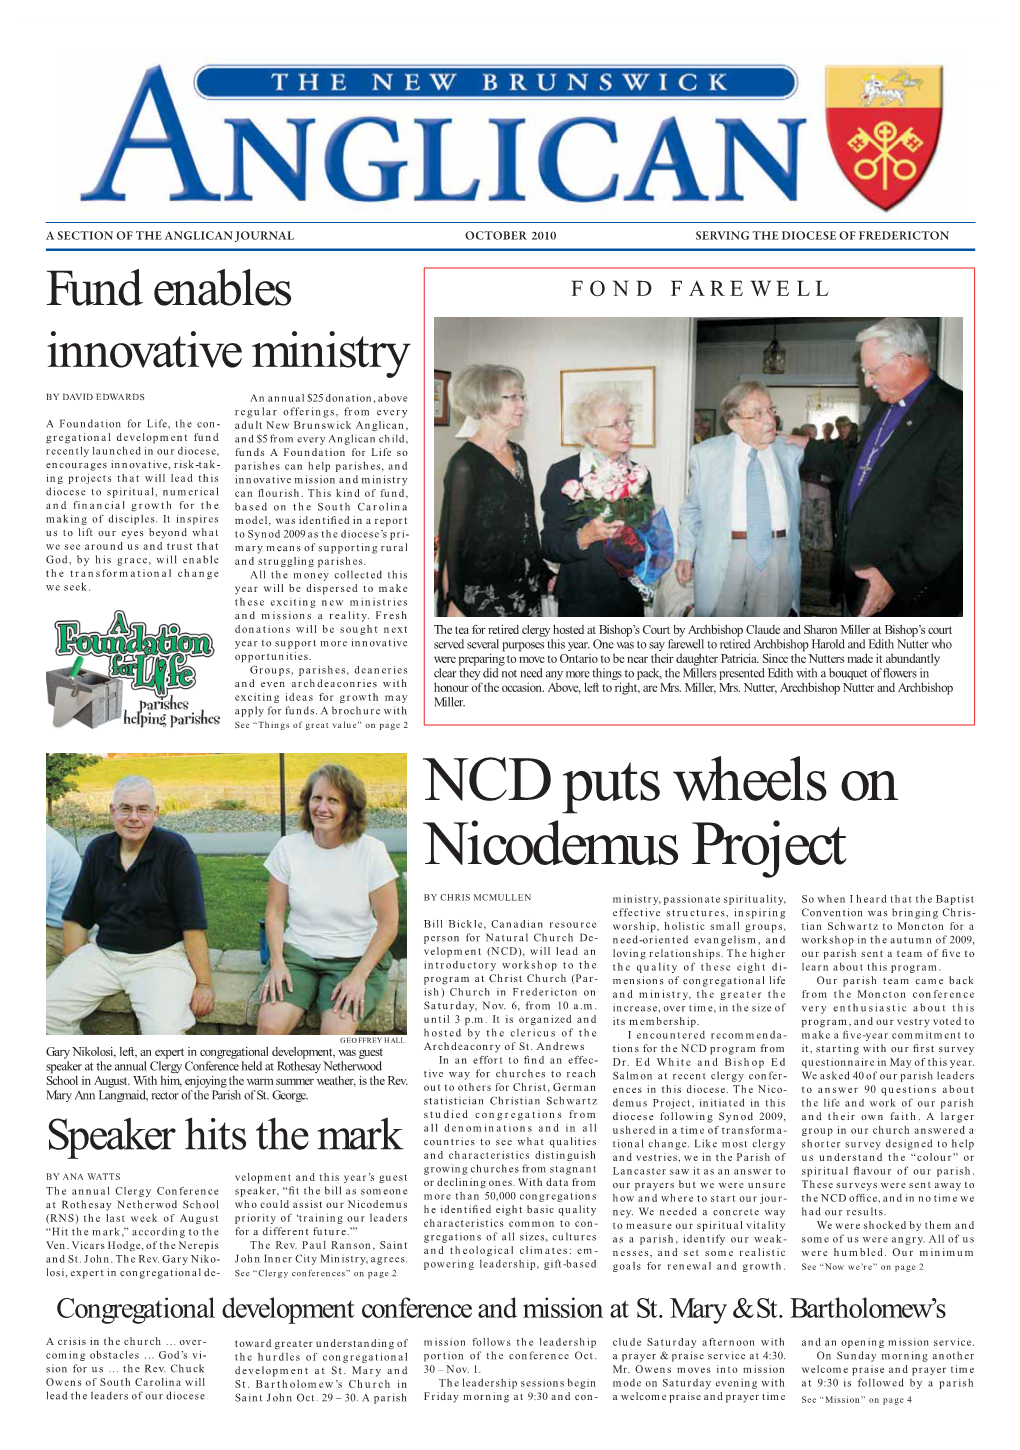 NCD Puts Wheels on Nicodemus Project